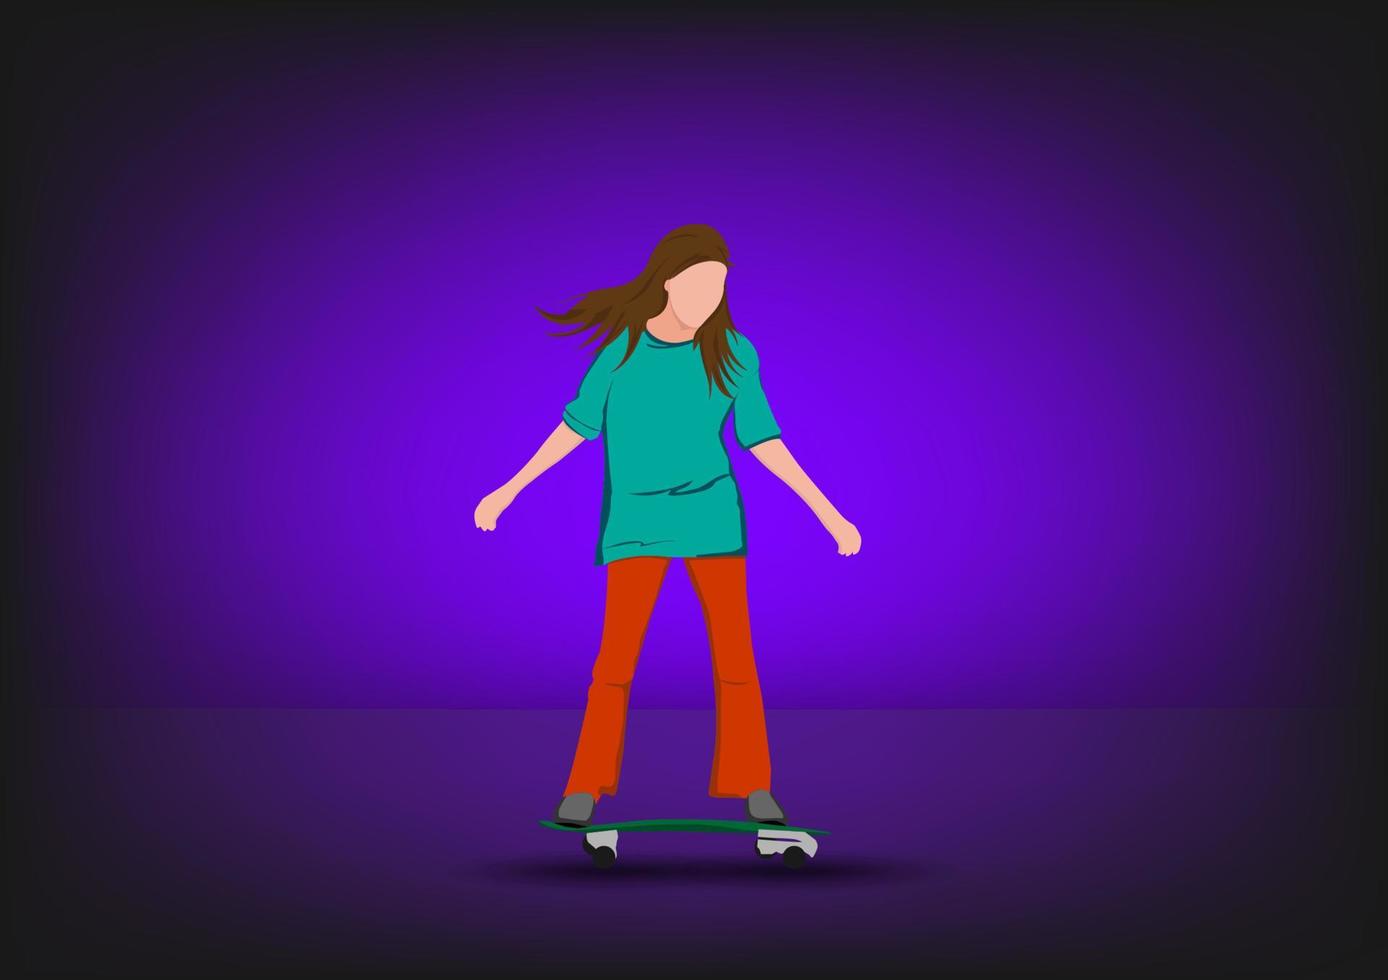 grafik bild flicka seriefigur åker skateboard eller surfa skate stående lila bakgrund vektorillustration vektor